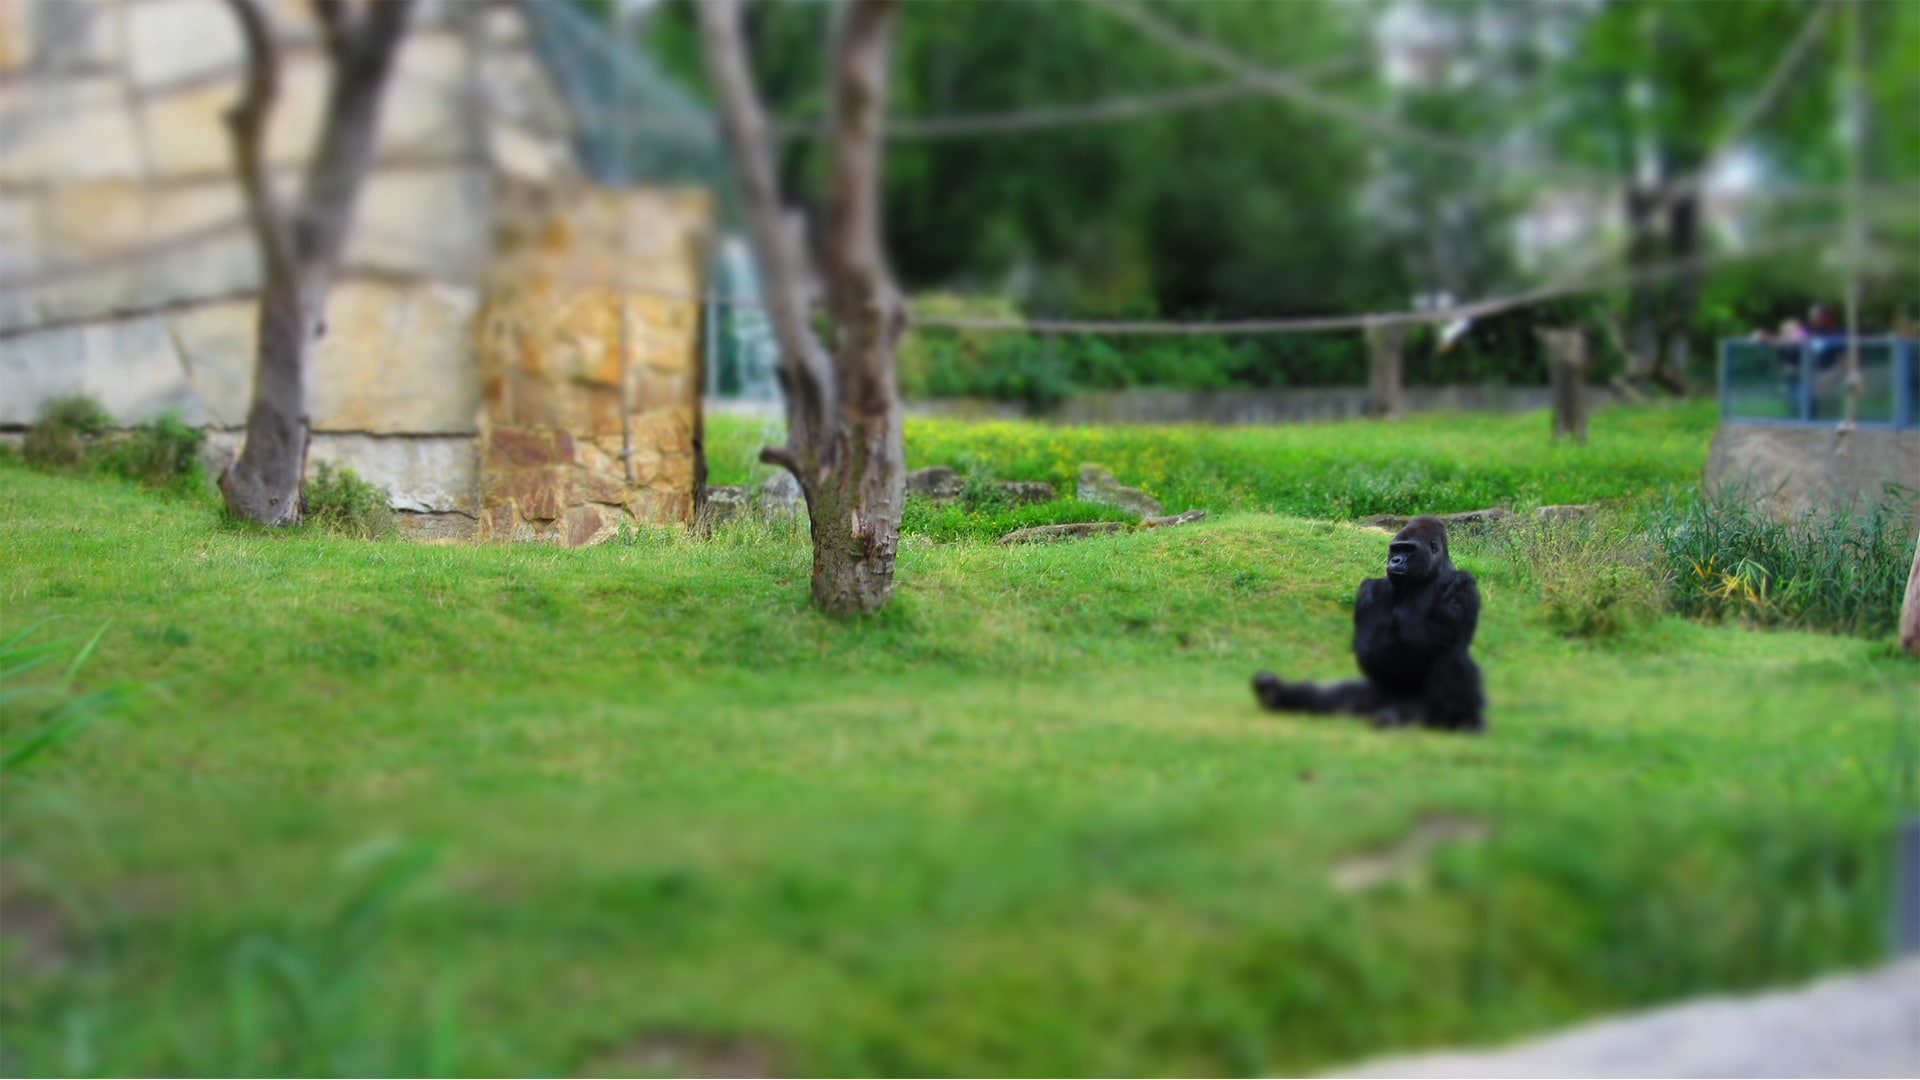 gorillas zoo alone harambe, plant, animal, animal themes, mammal